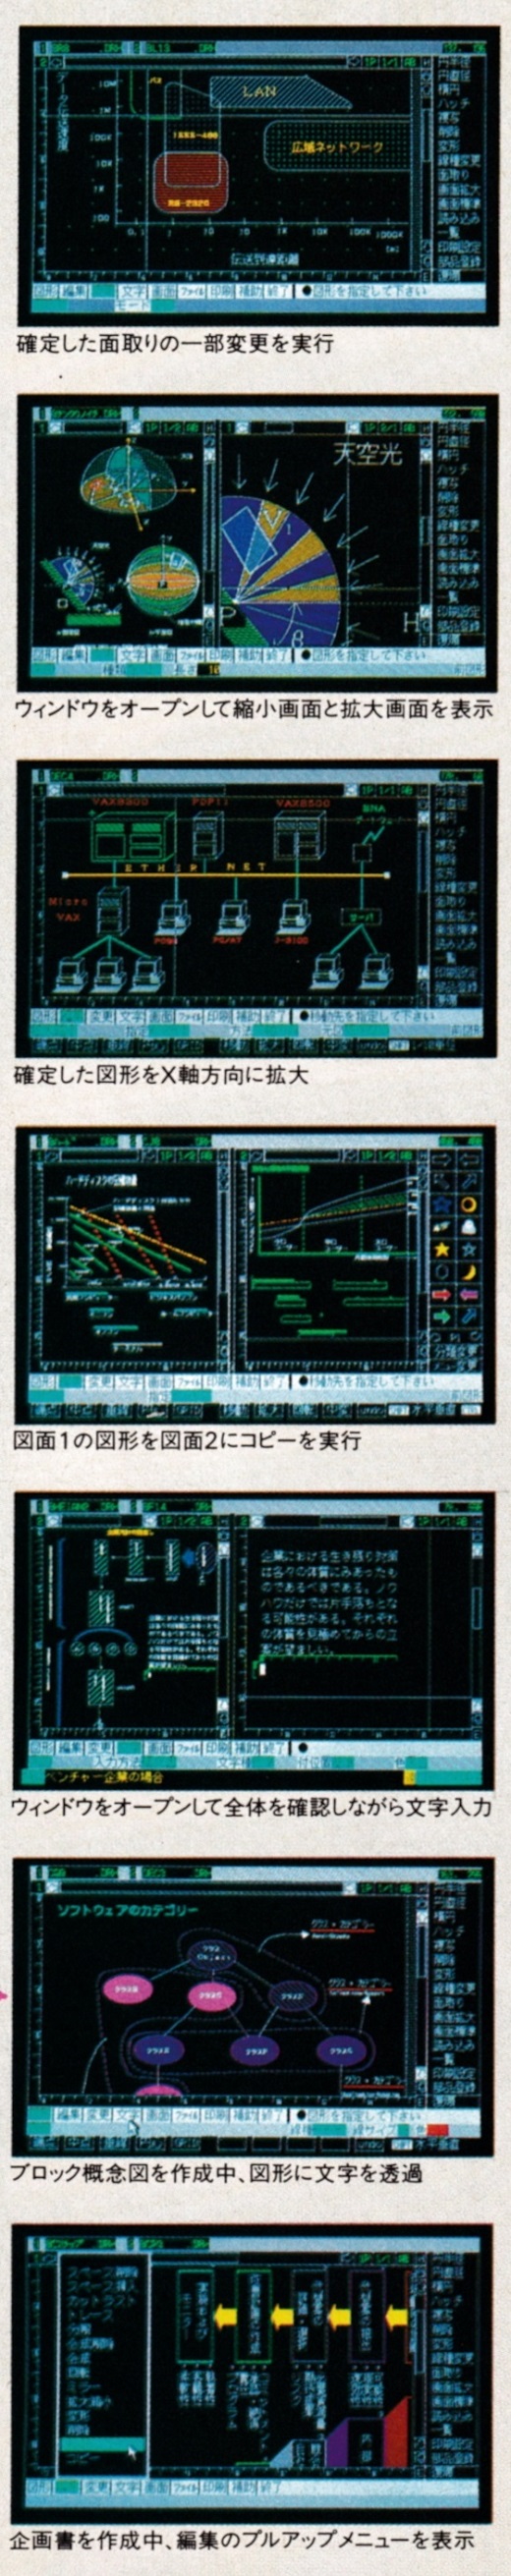 ASCII1987(02)a09花子4_W520.jpg